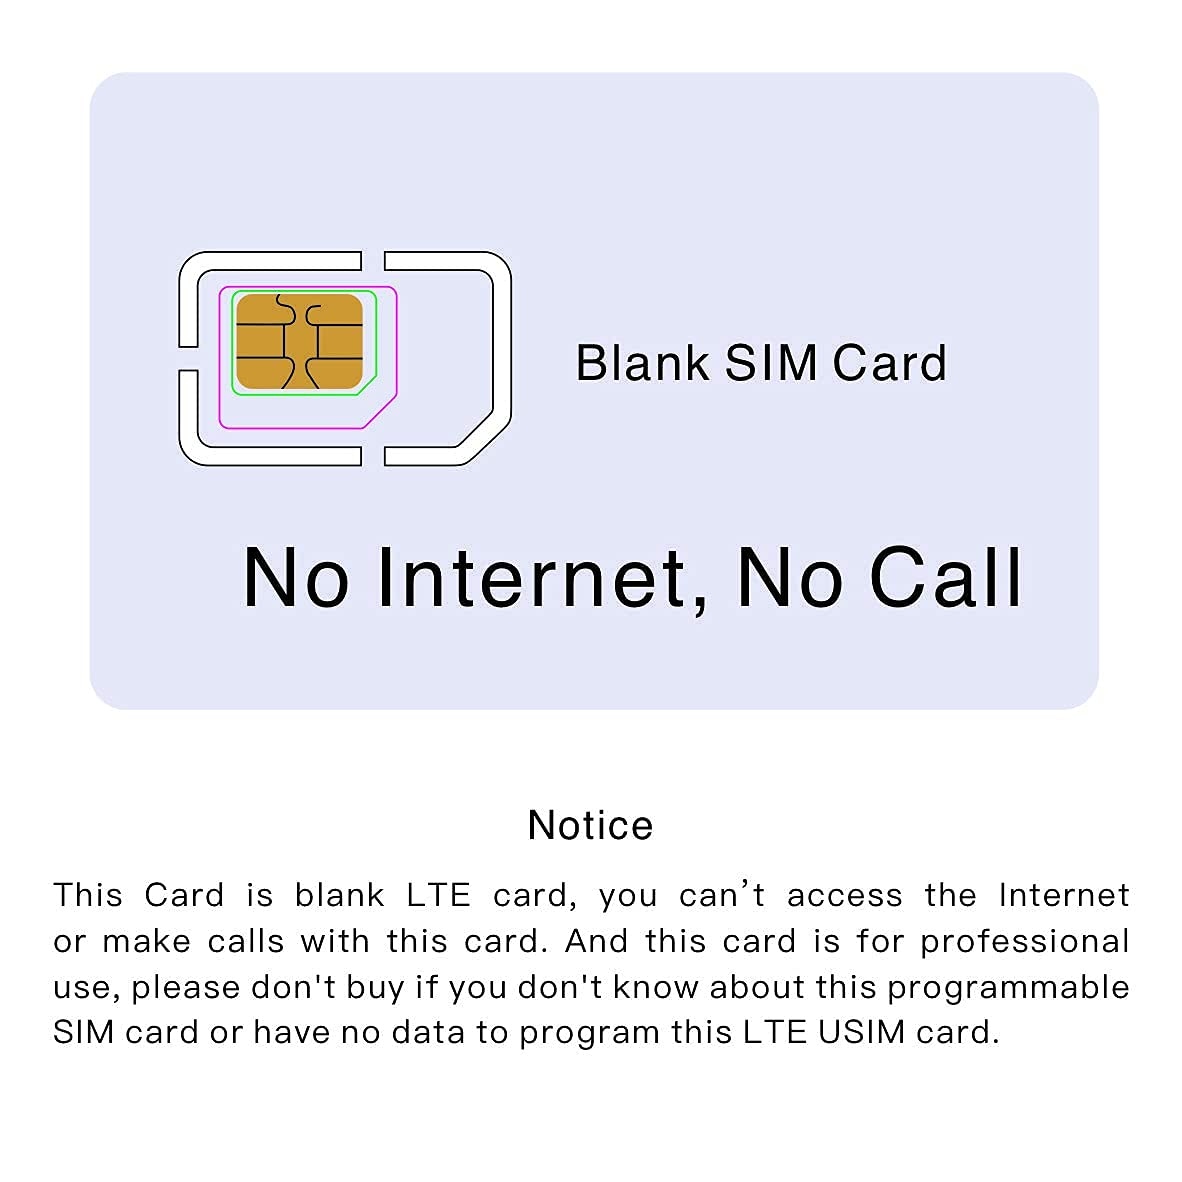 125pcs LTE card with logo monochrome printing to S.Ramkumar.